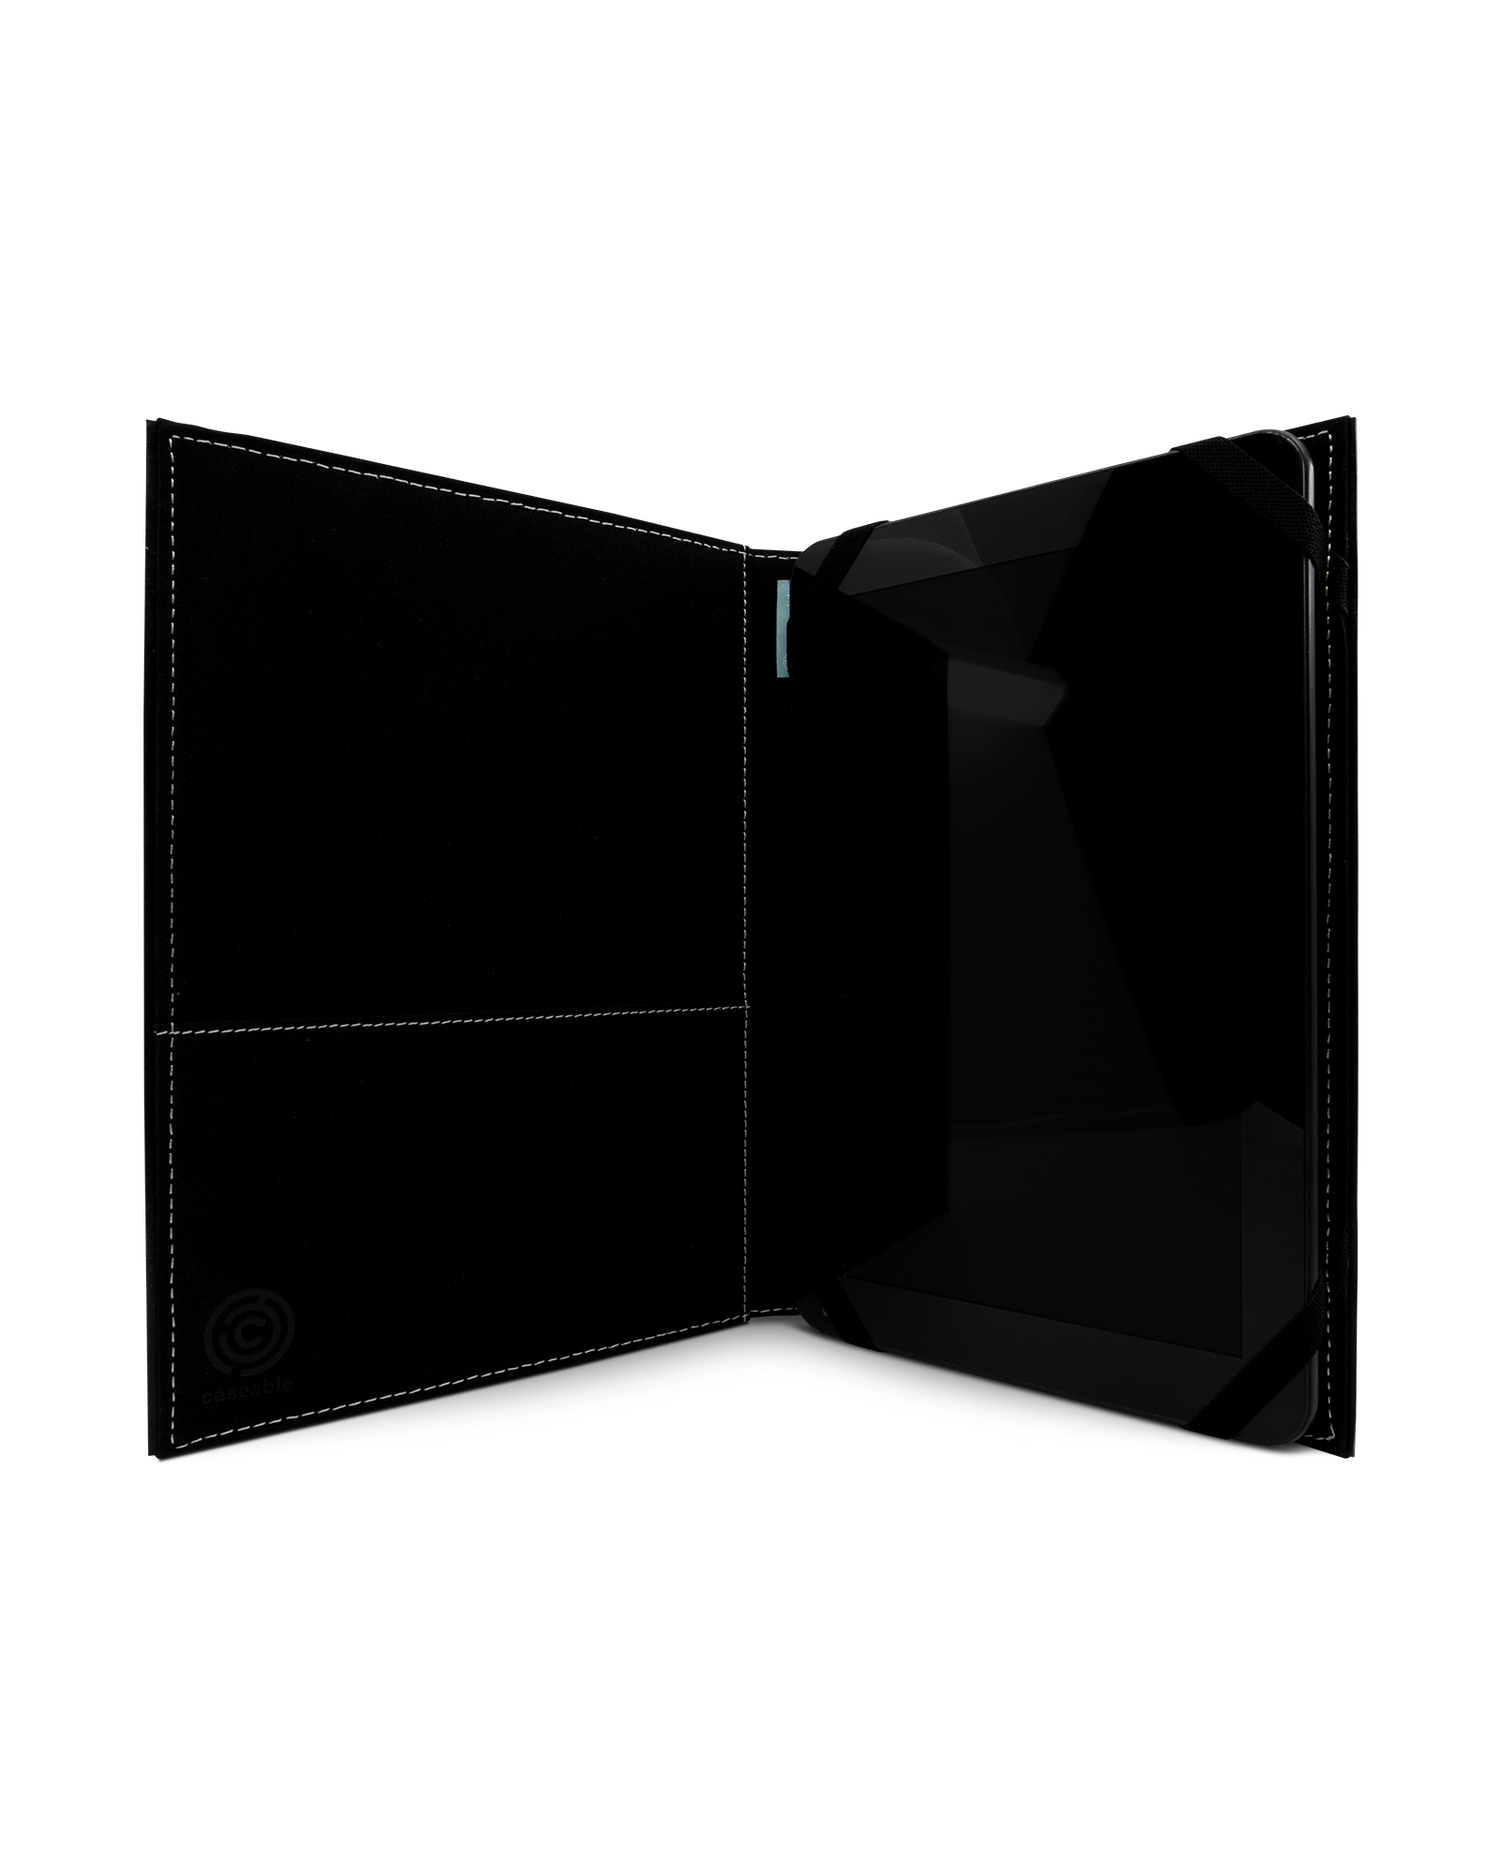 PLUM Tablet Case M: Opened interior view